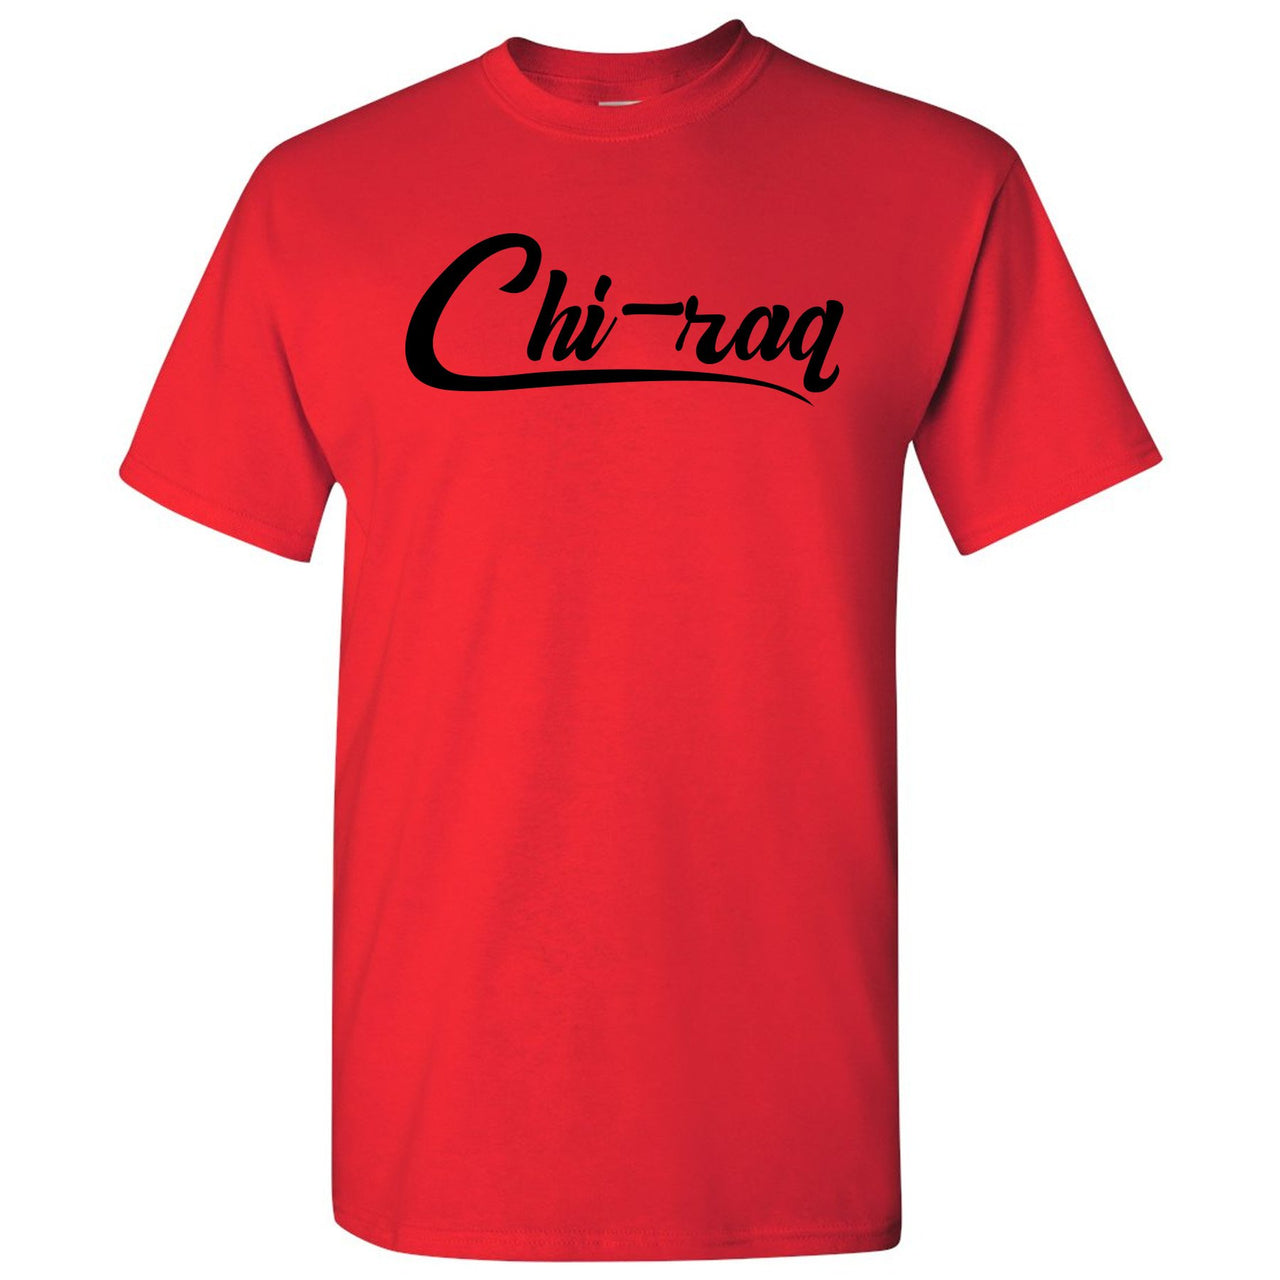 Bred 2019 4s T Shirt | Chiraq, Red